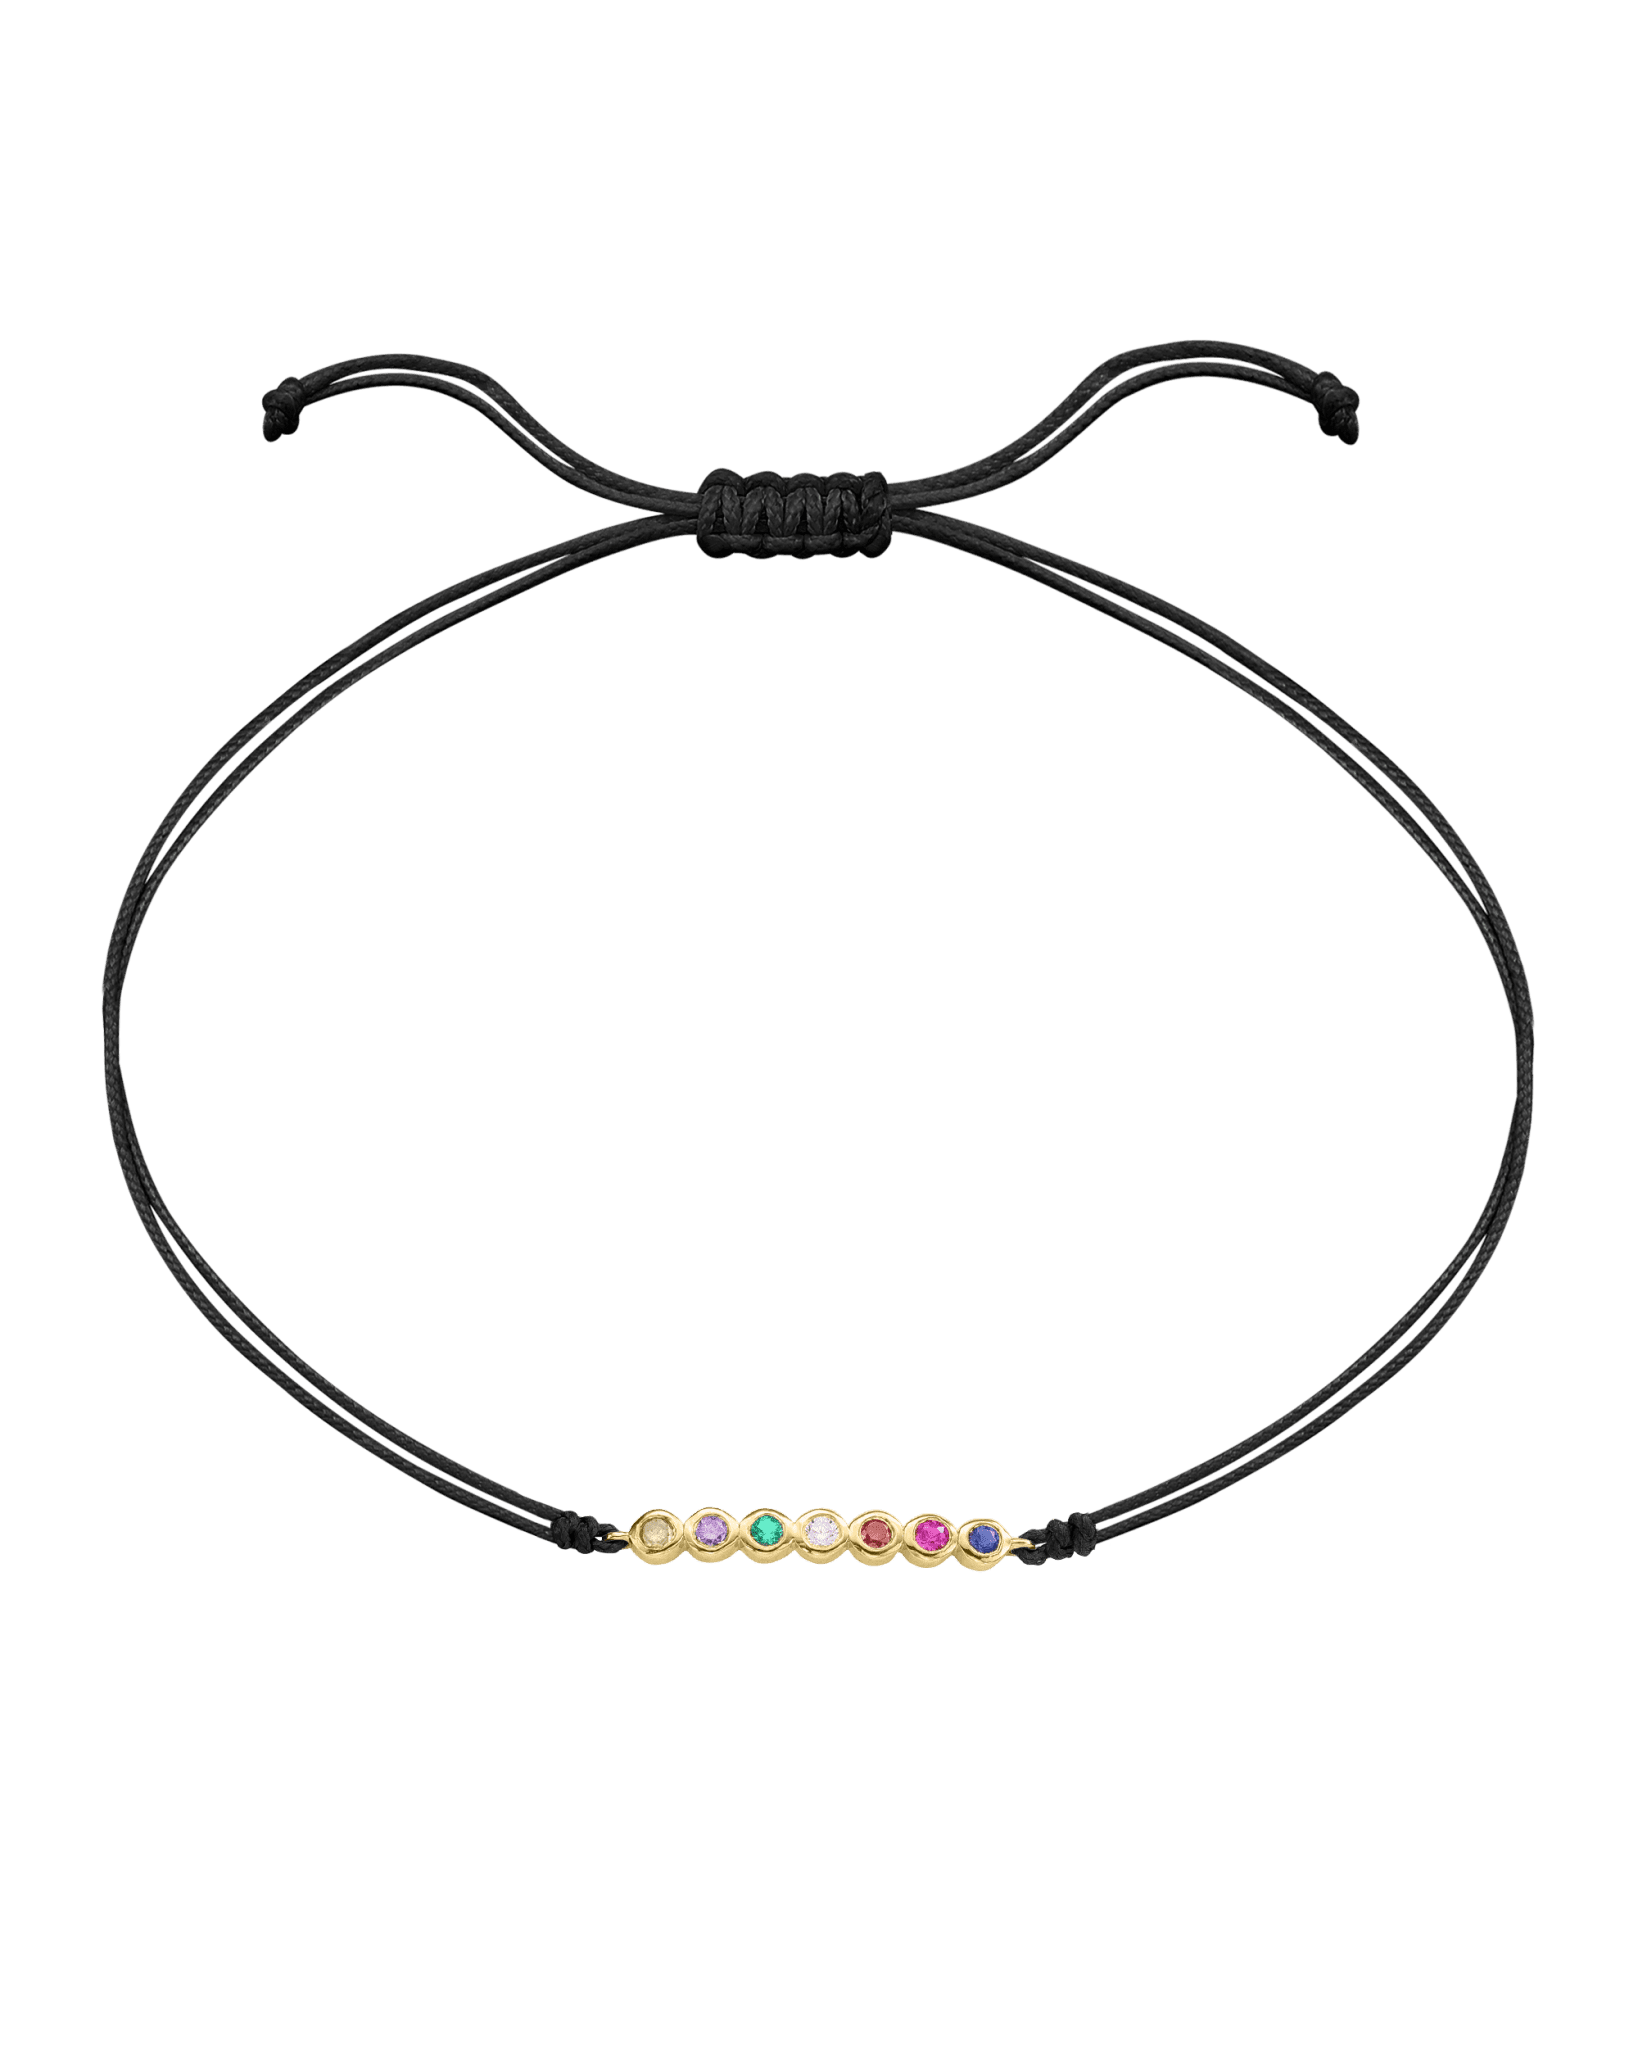 The Birthstones Bar Bracelet